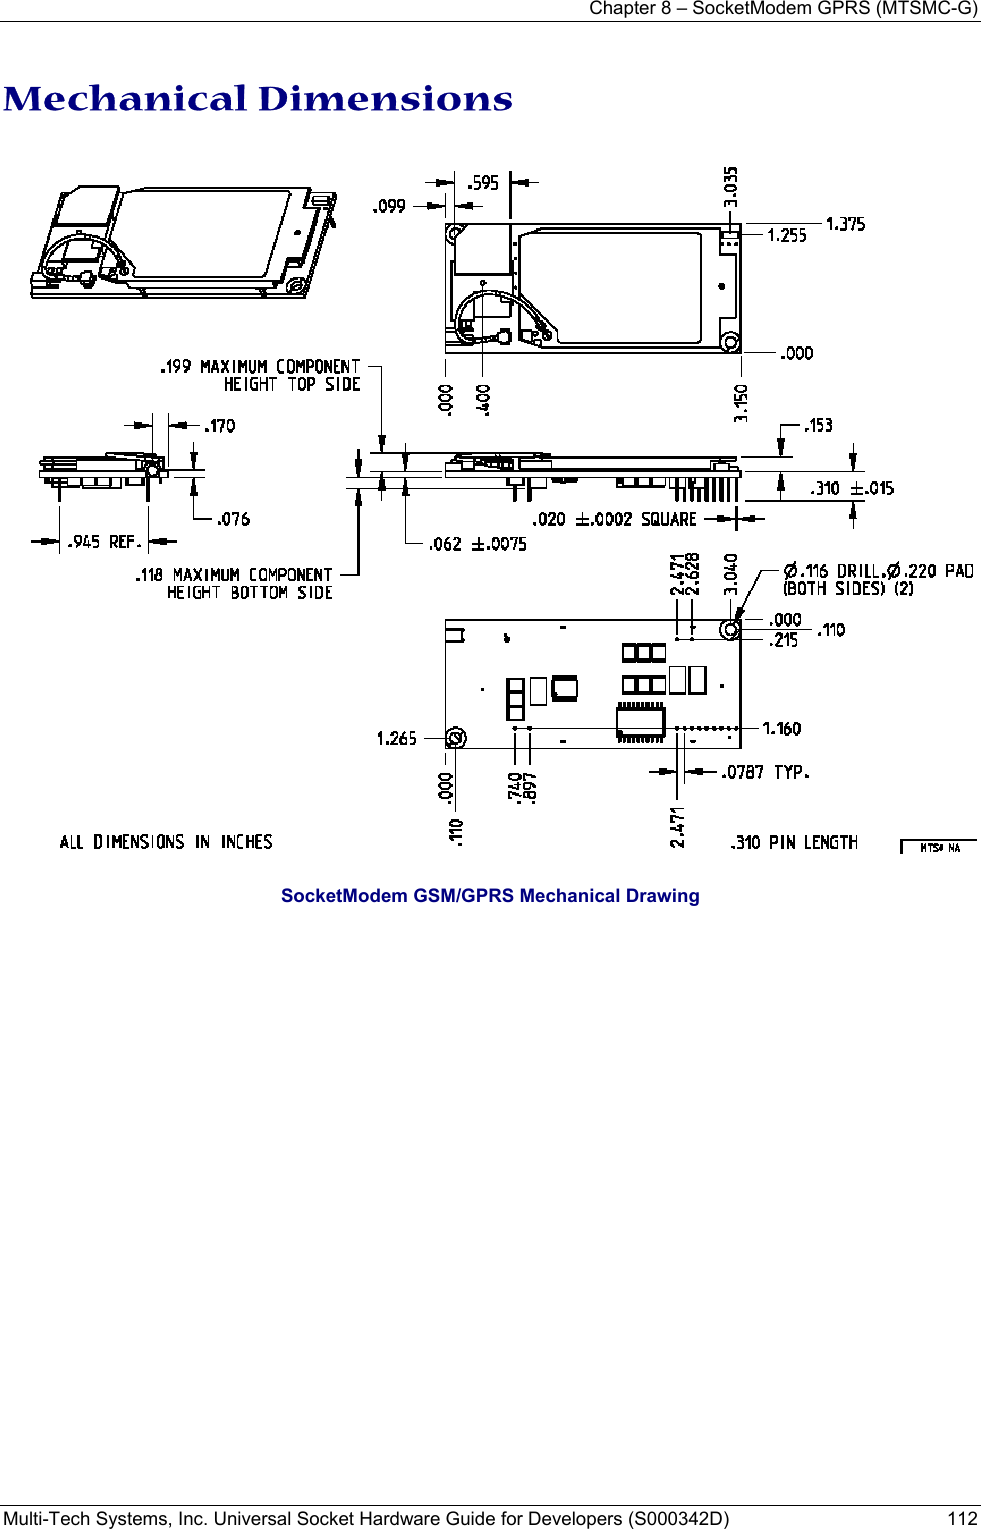 Chapter 8 – SocketModem GPRS (MTSMC-G) Multi-Tech Systems, Inc. Universal Socket Hardware Guide for Developers (S000342D)  112  Mechanical Dimensions    SocketModem GSM/GPRS Mechanical Drawing  